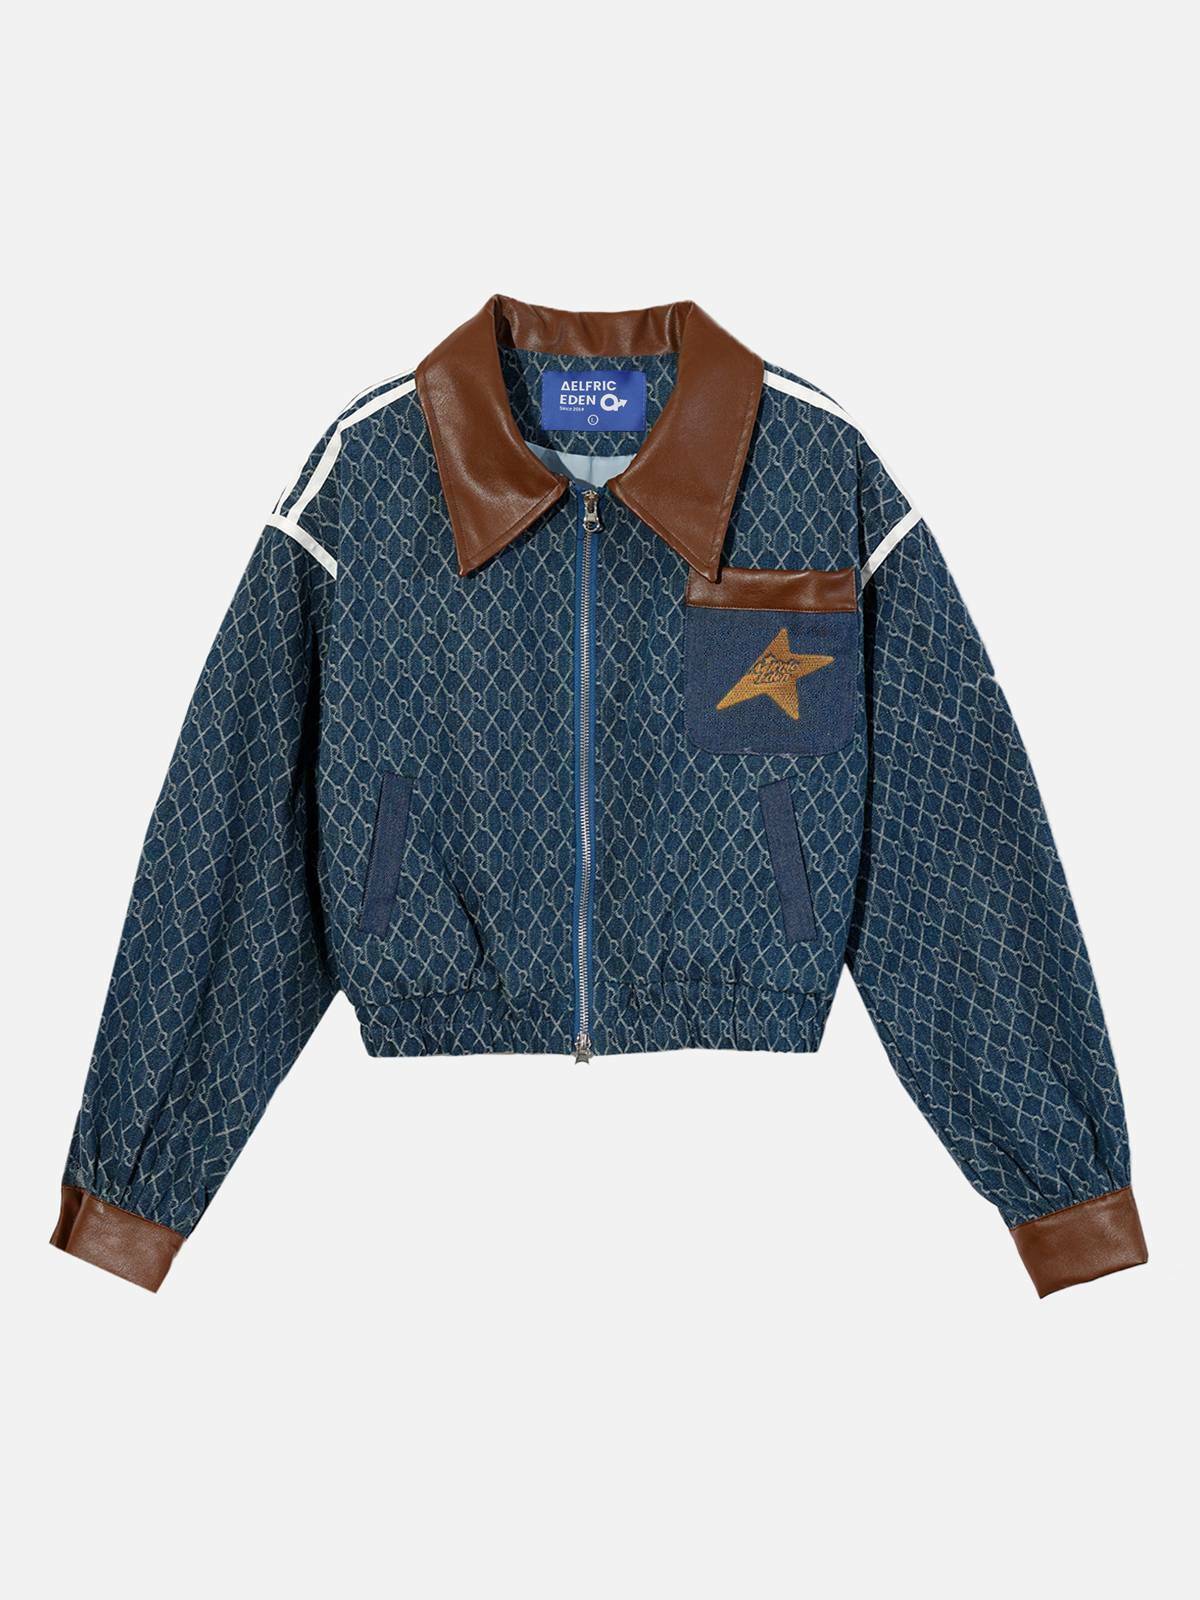 vintage denim jacquard jacket cropped & chic style 1658